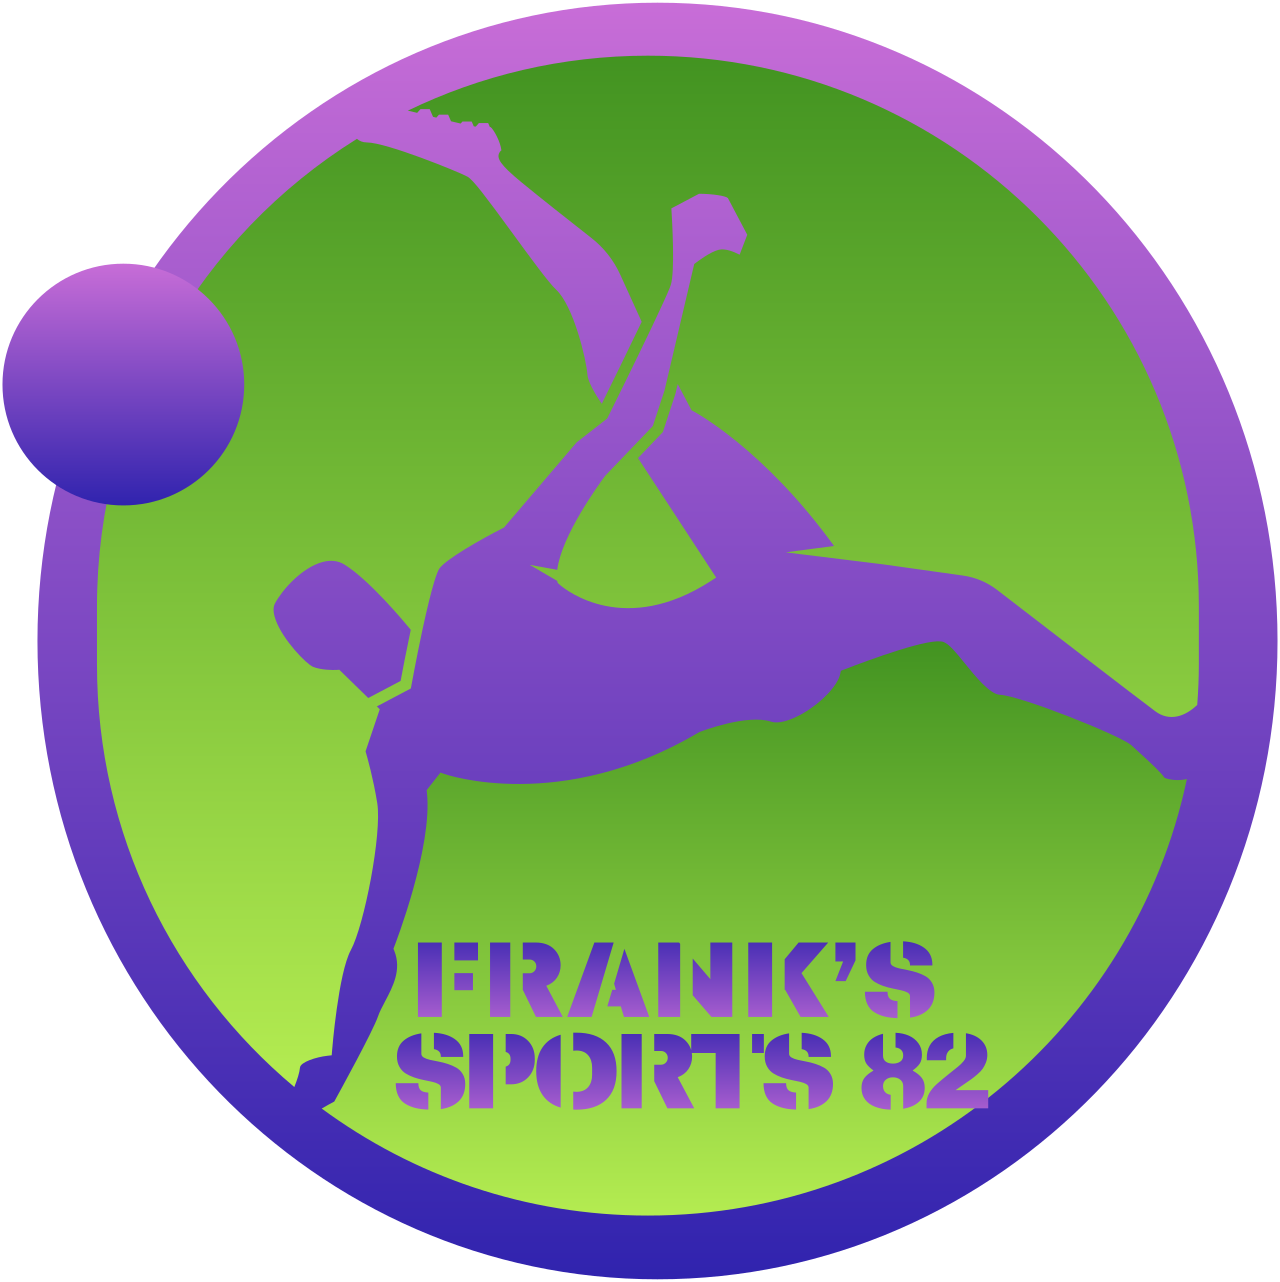 FRANK’S's logo